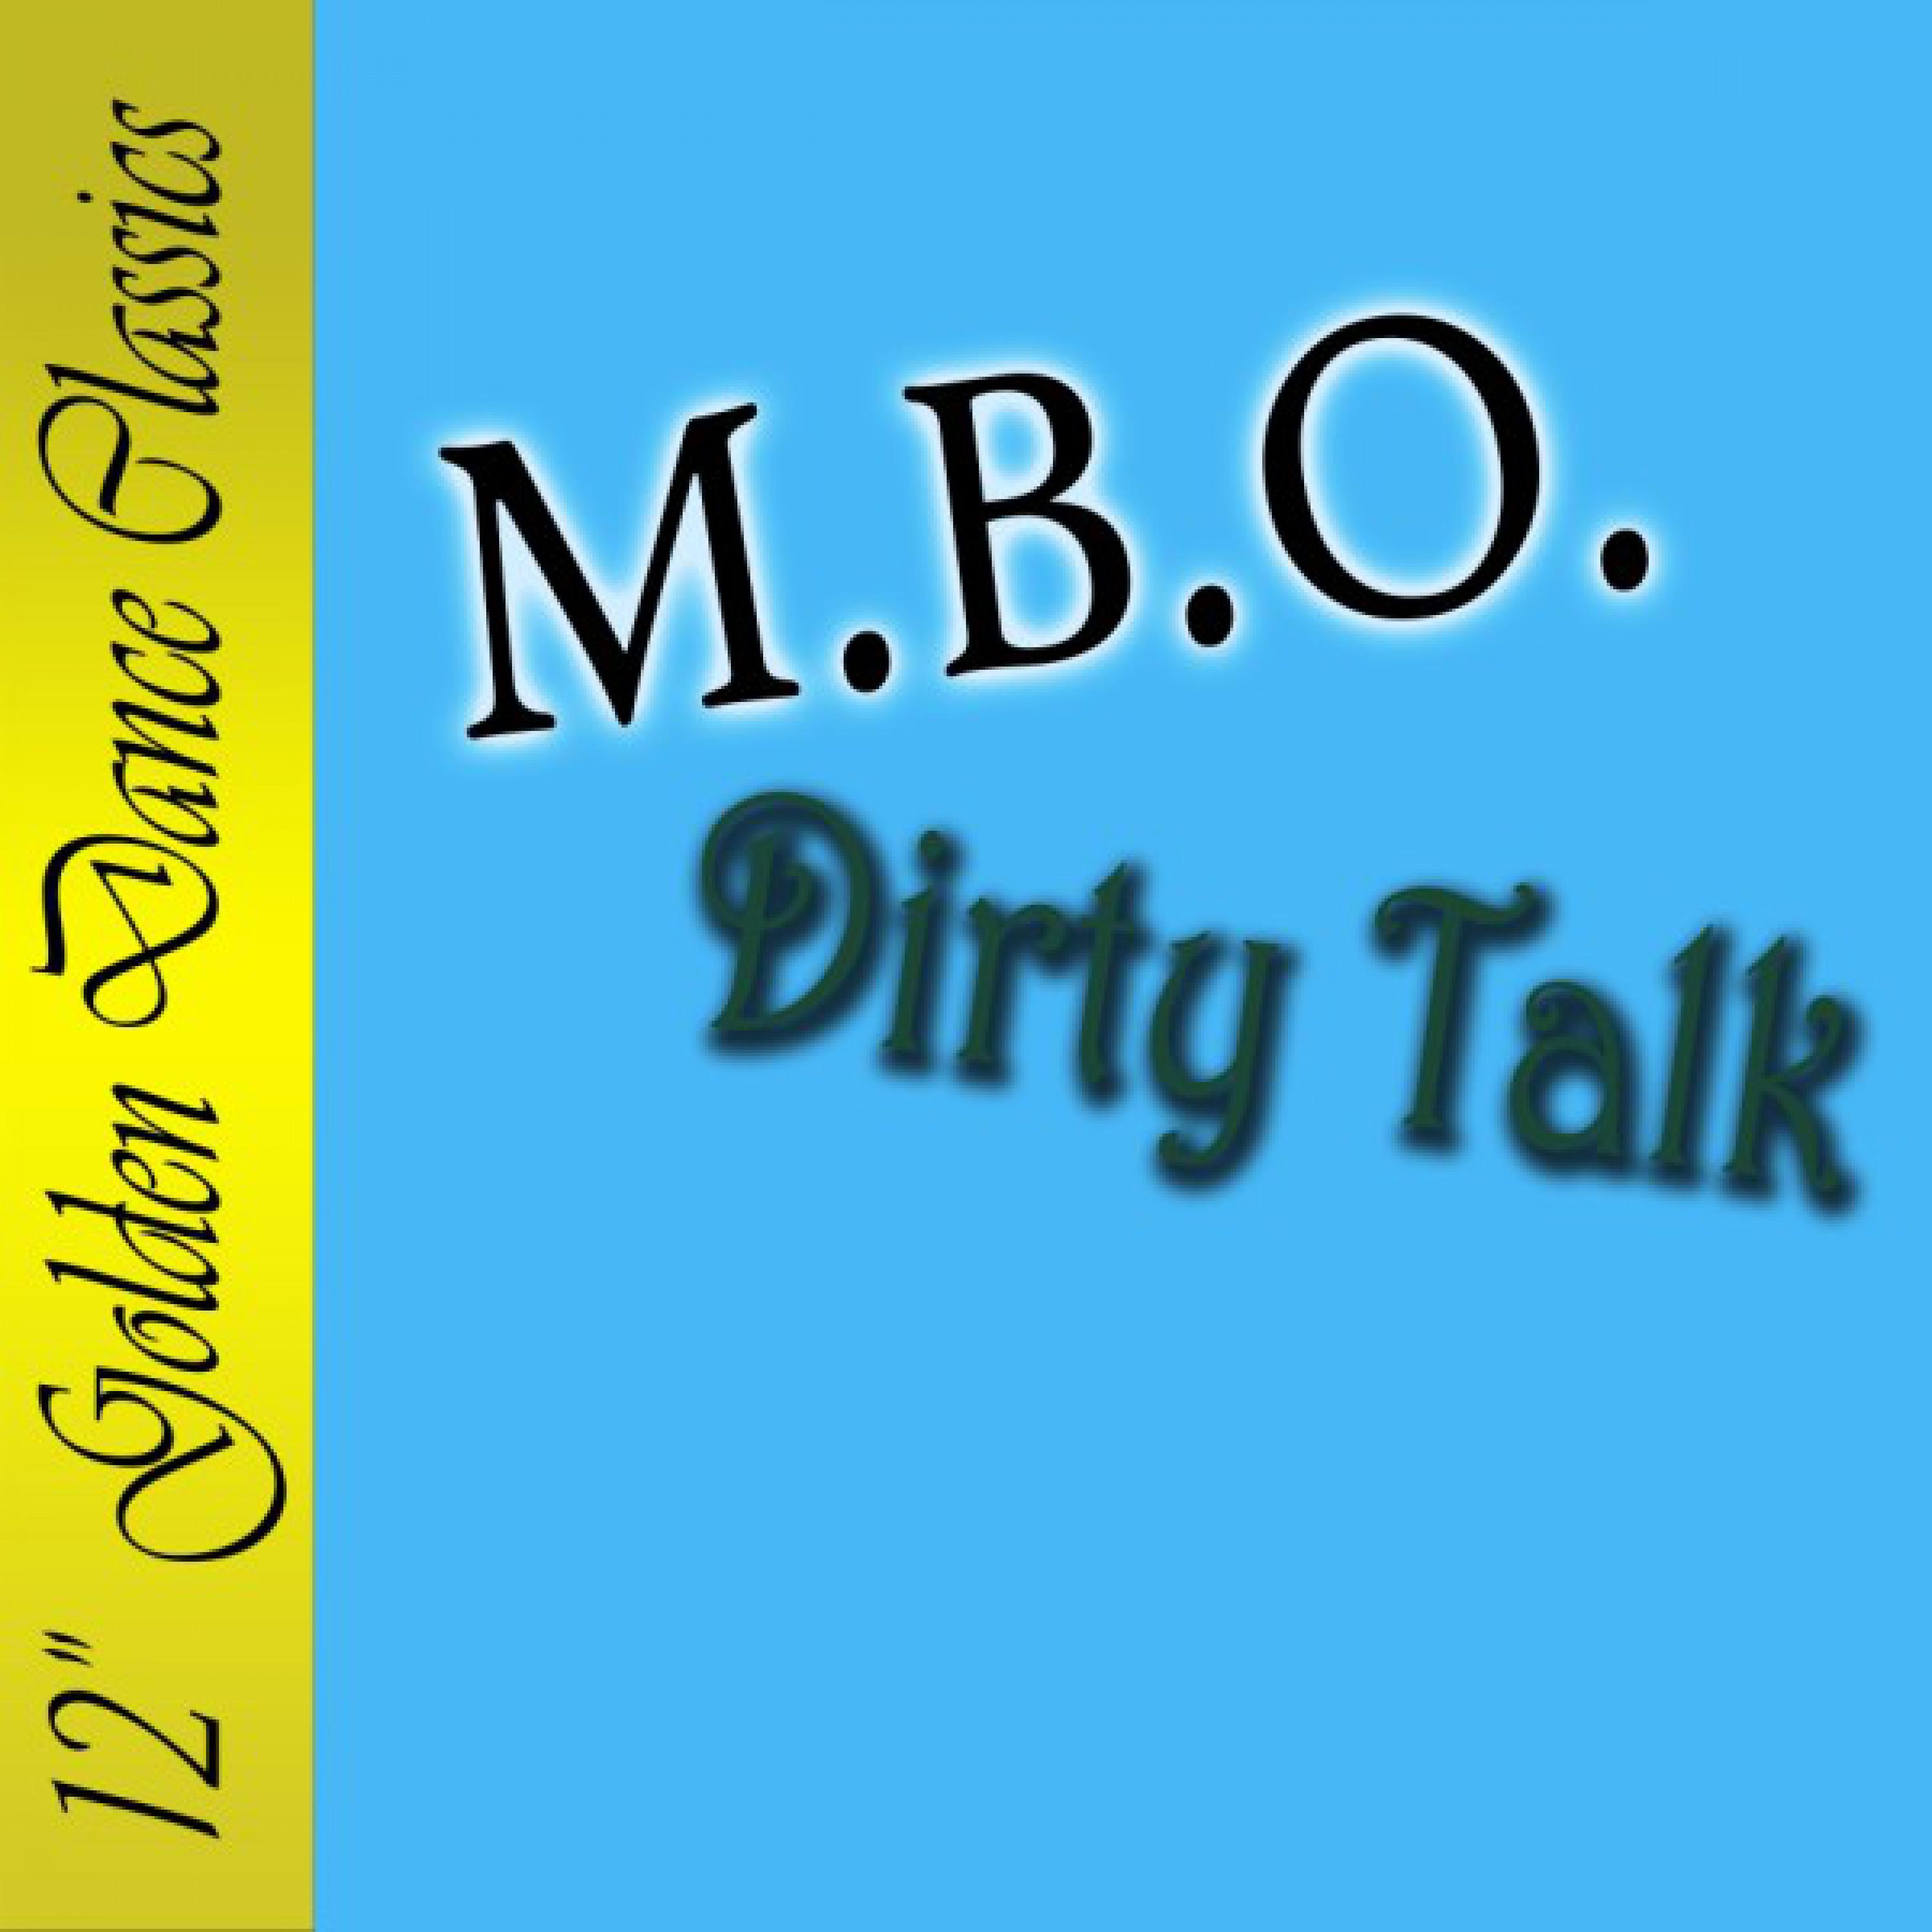 Dirty Talk "2002" (Instrumental Version)